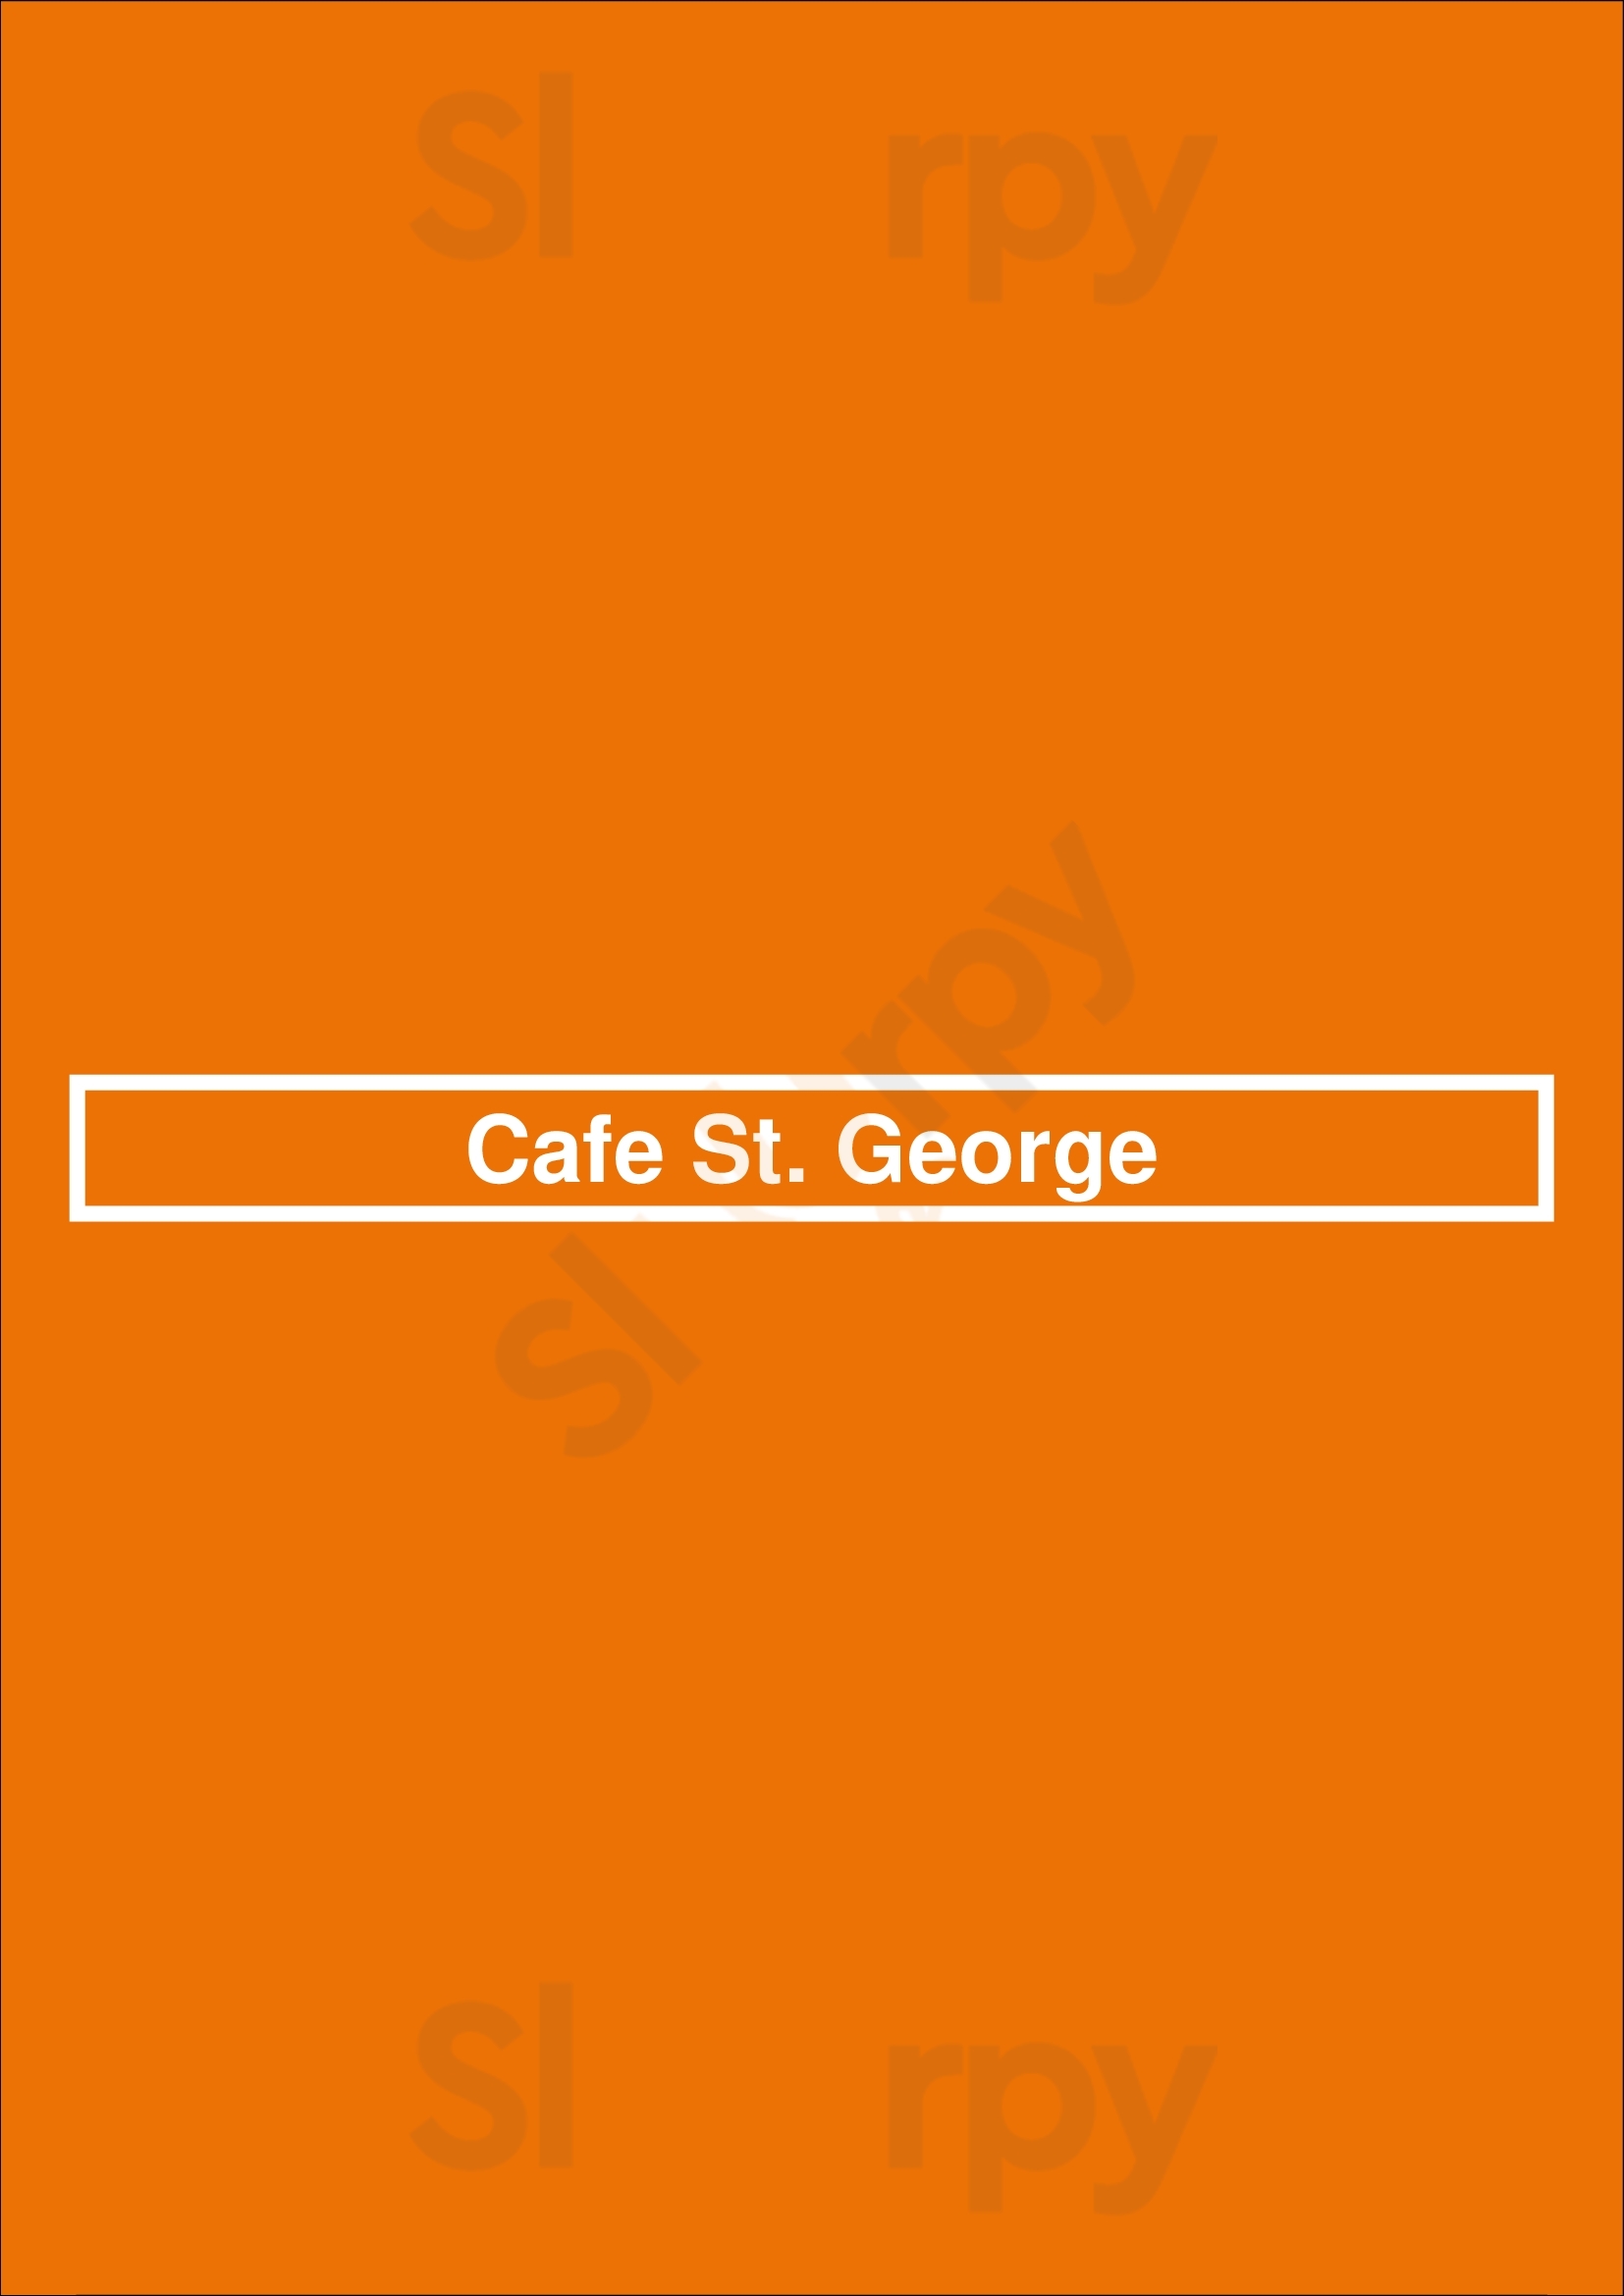 Cafe St. George Amsterdam Menu - 1